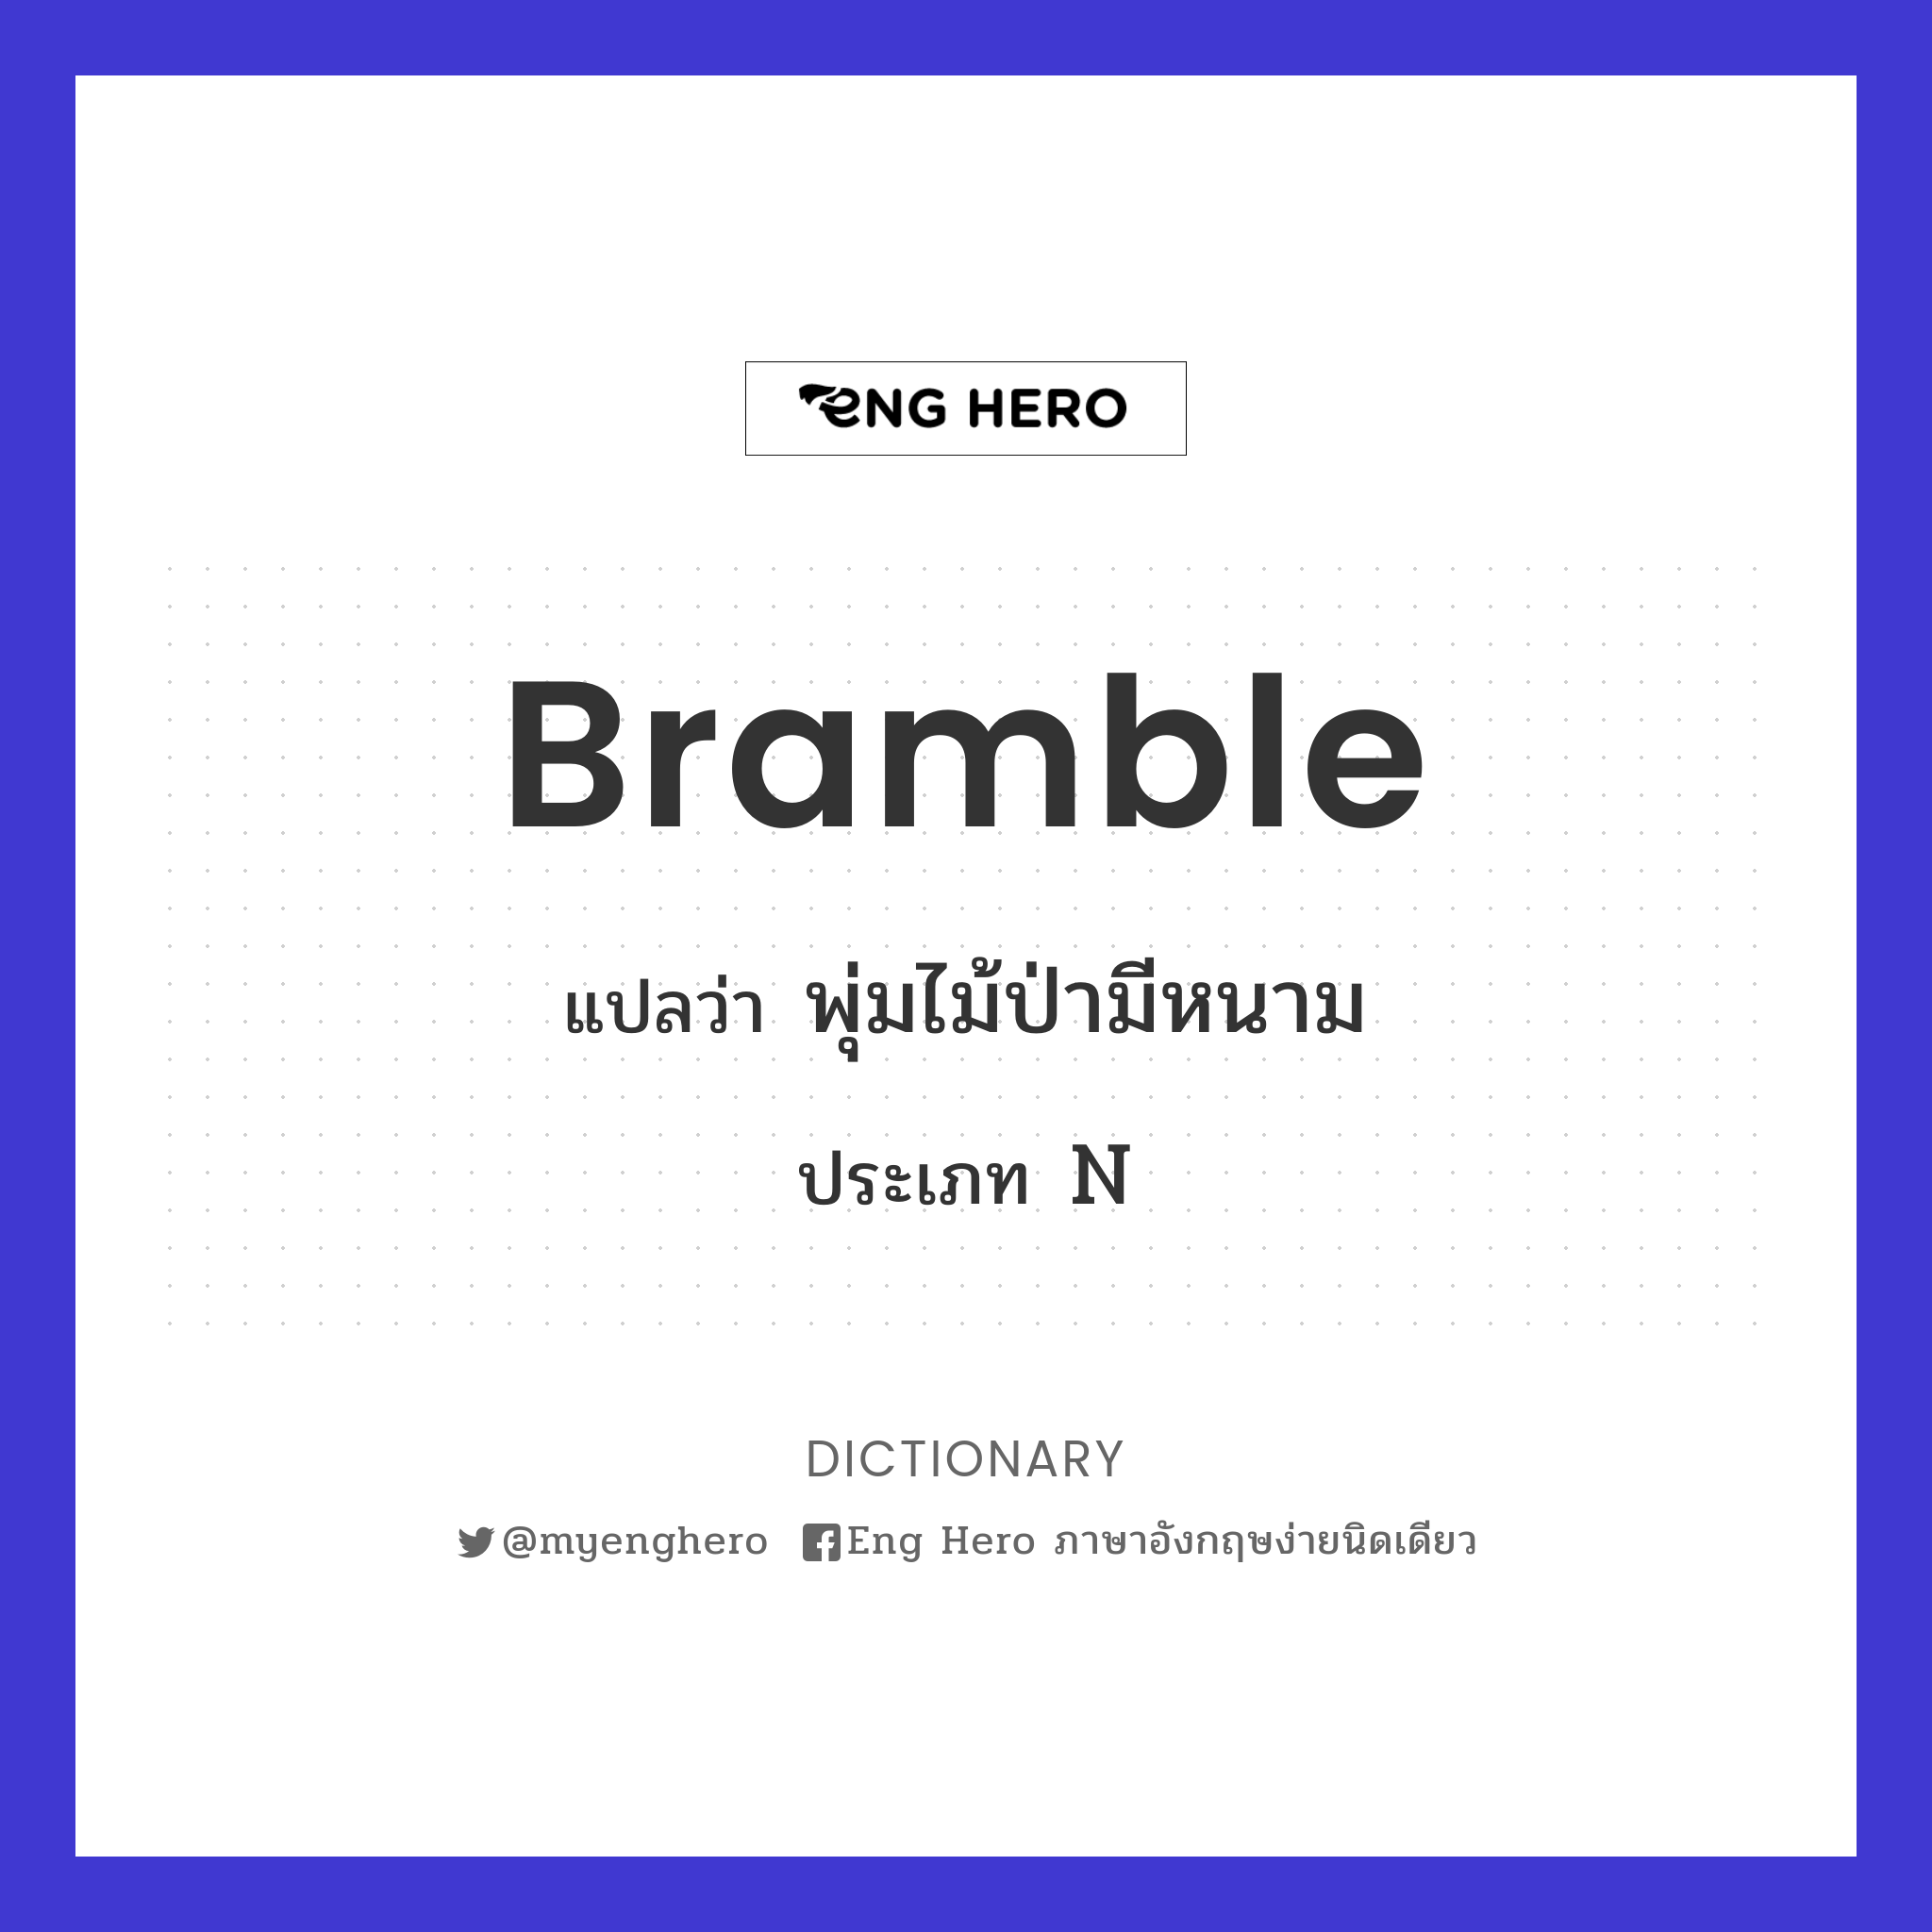 bramble